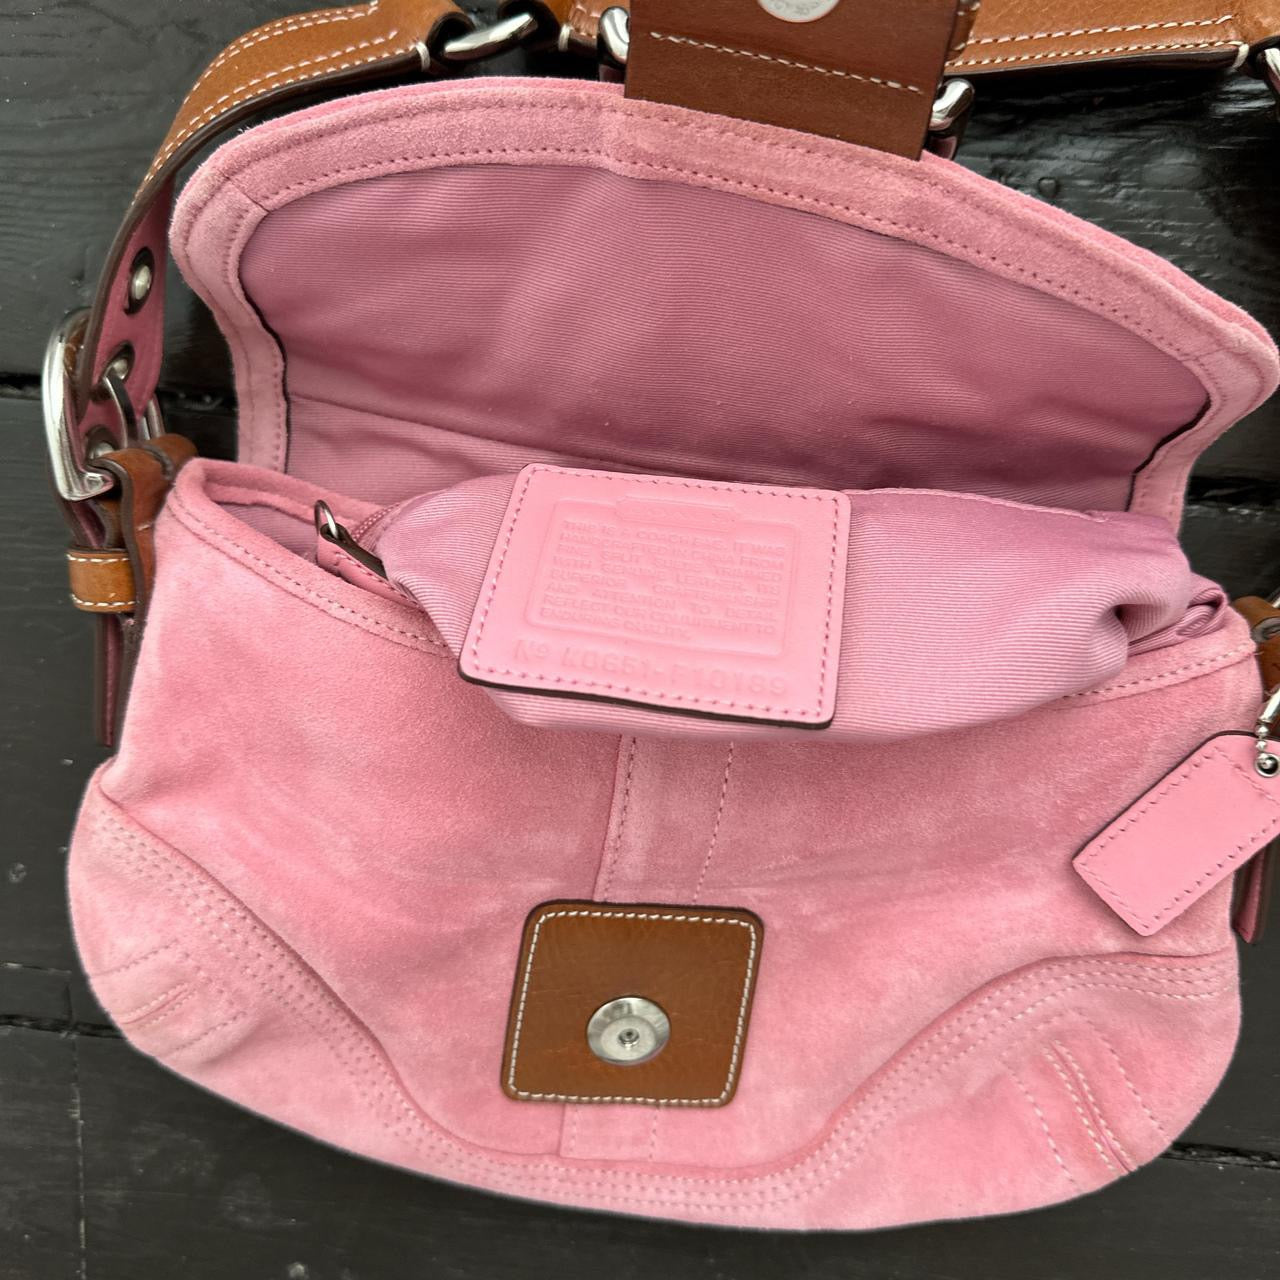 Vintage 90’s Coach pink suede leather bag